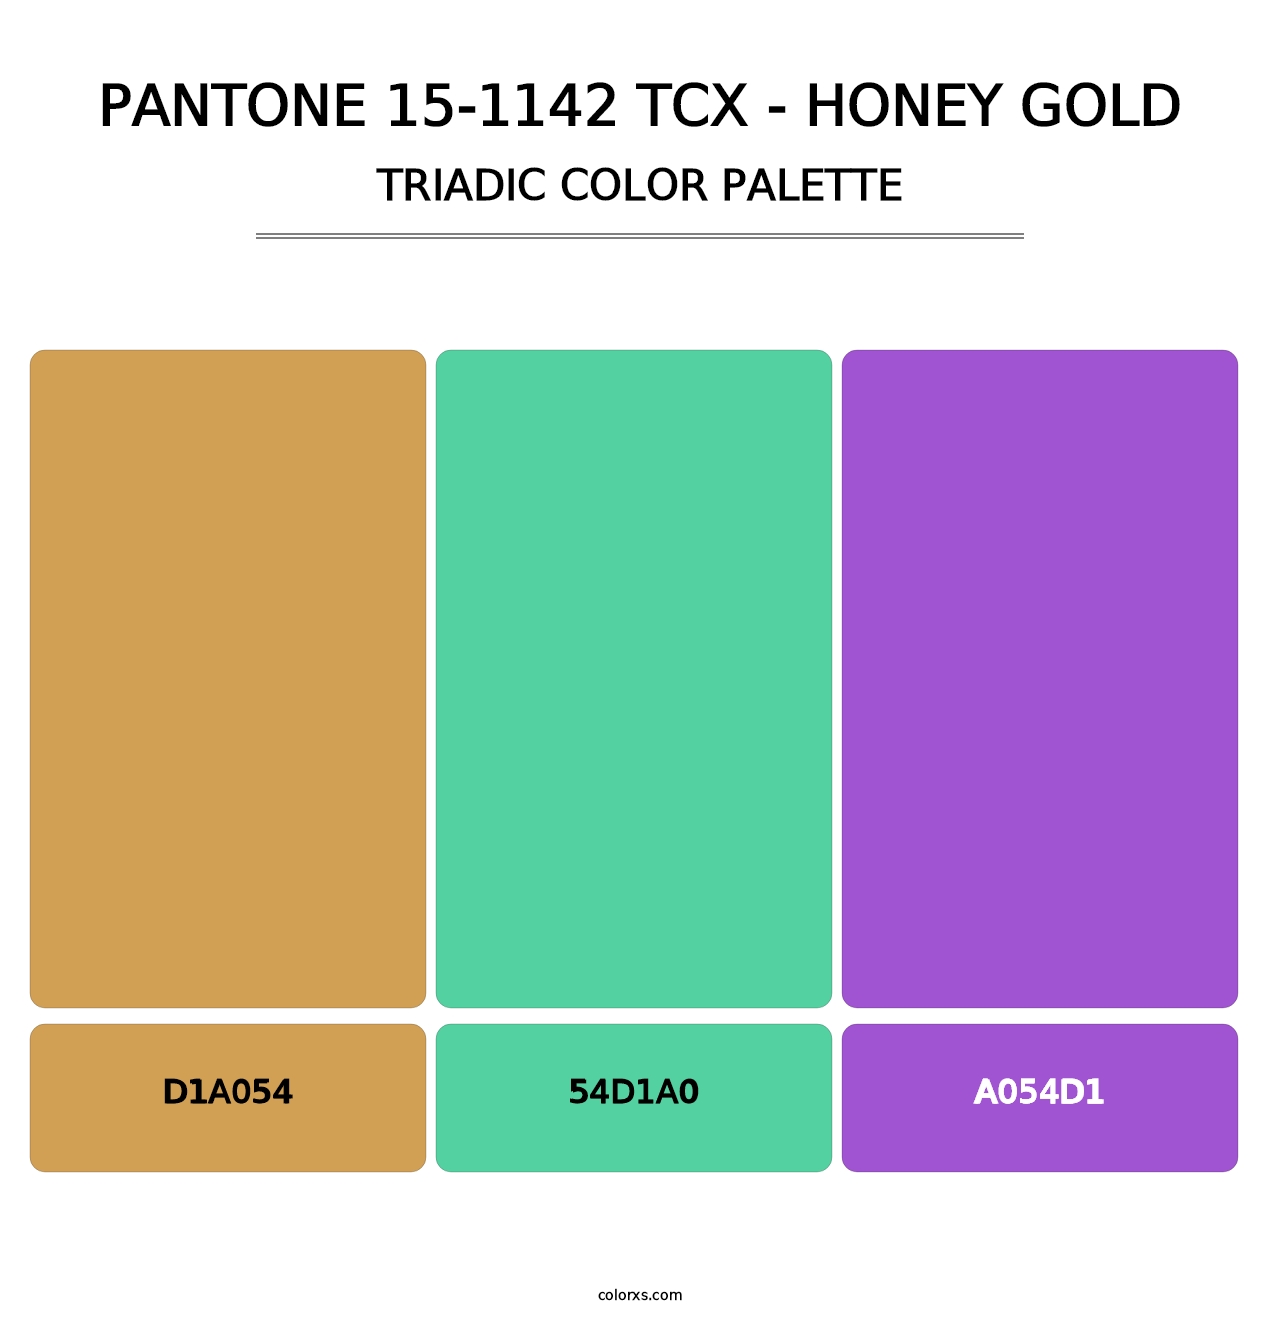 PANTONE 15-1142 TCX - Honey Gold - Triadic Color Palette